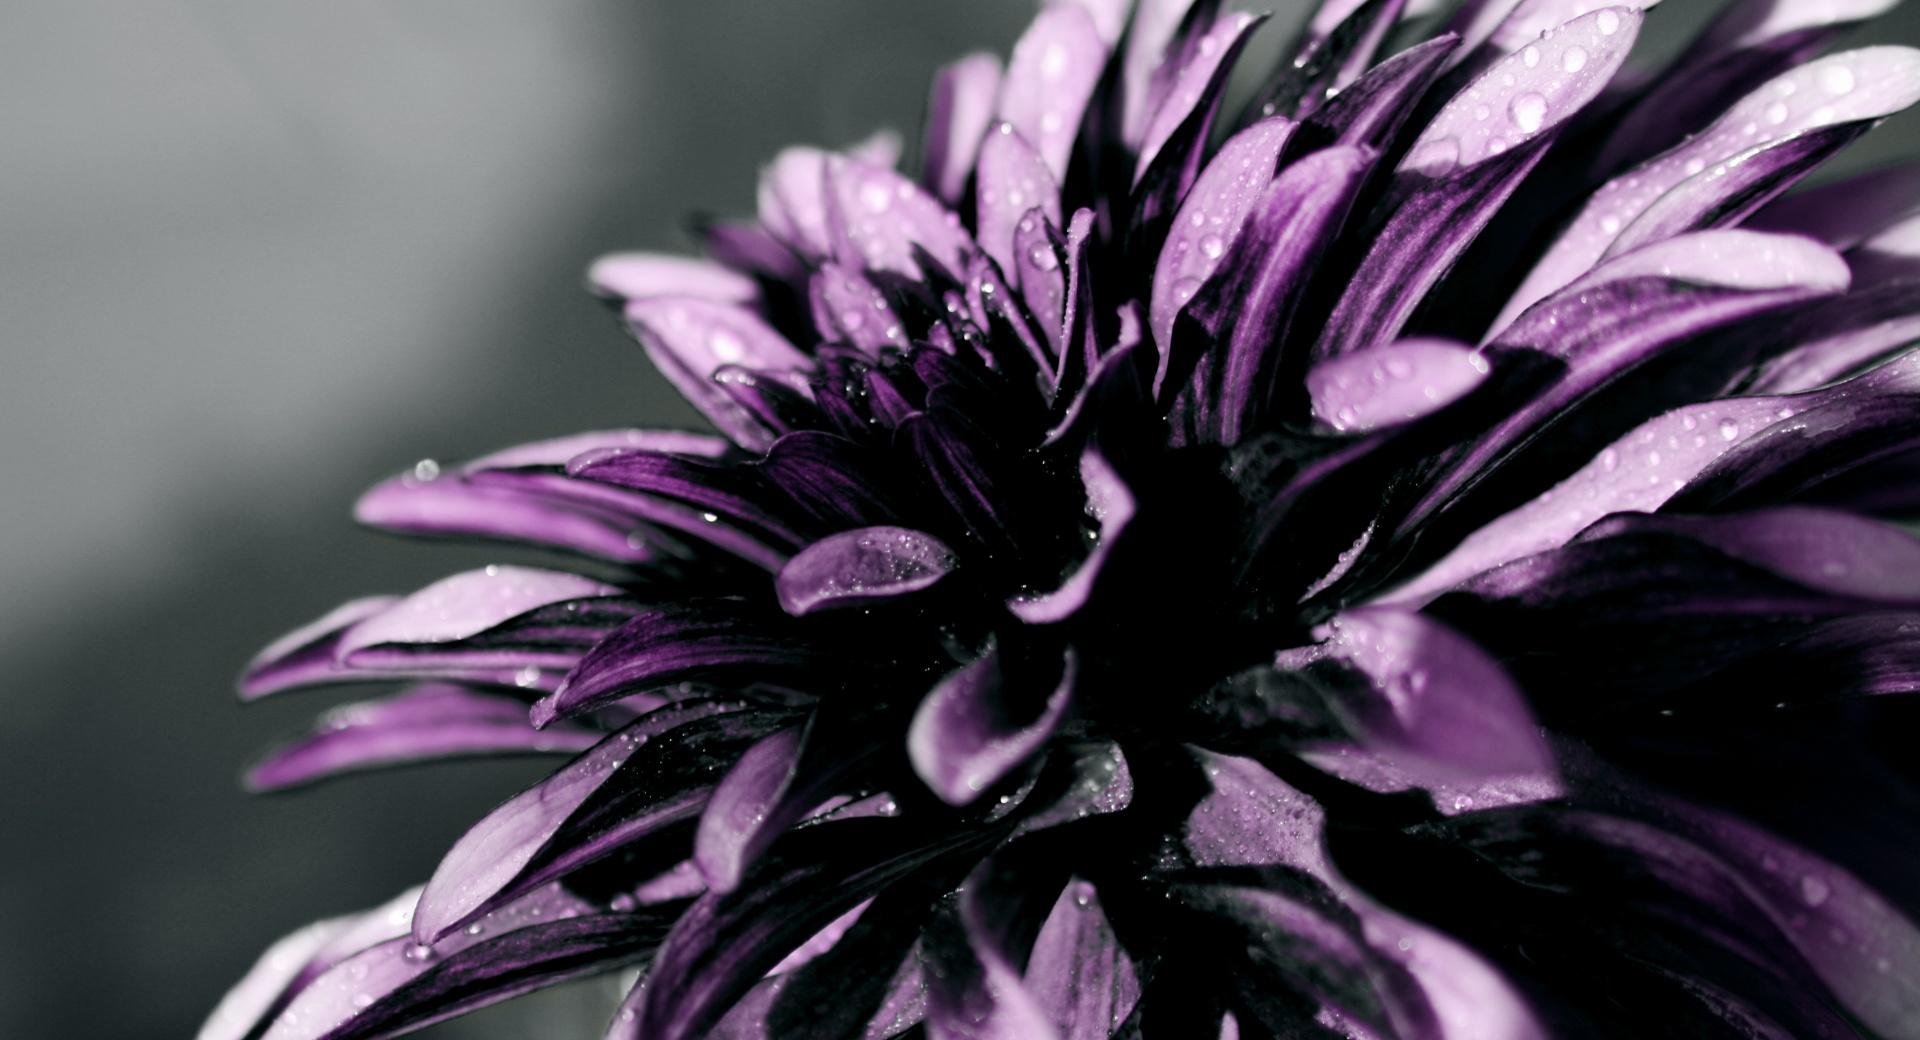 Purple Chrysanthemum Macro at 1600 x 1200 size wallpapers HD quality